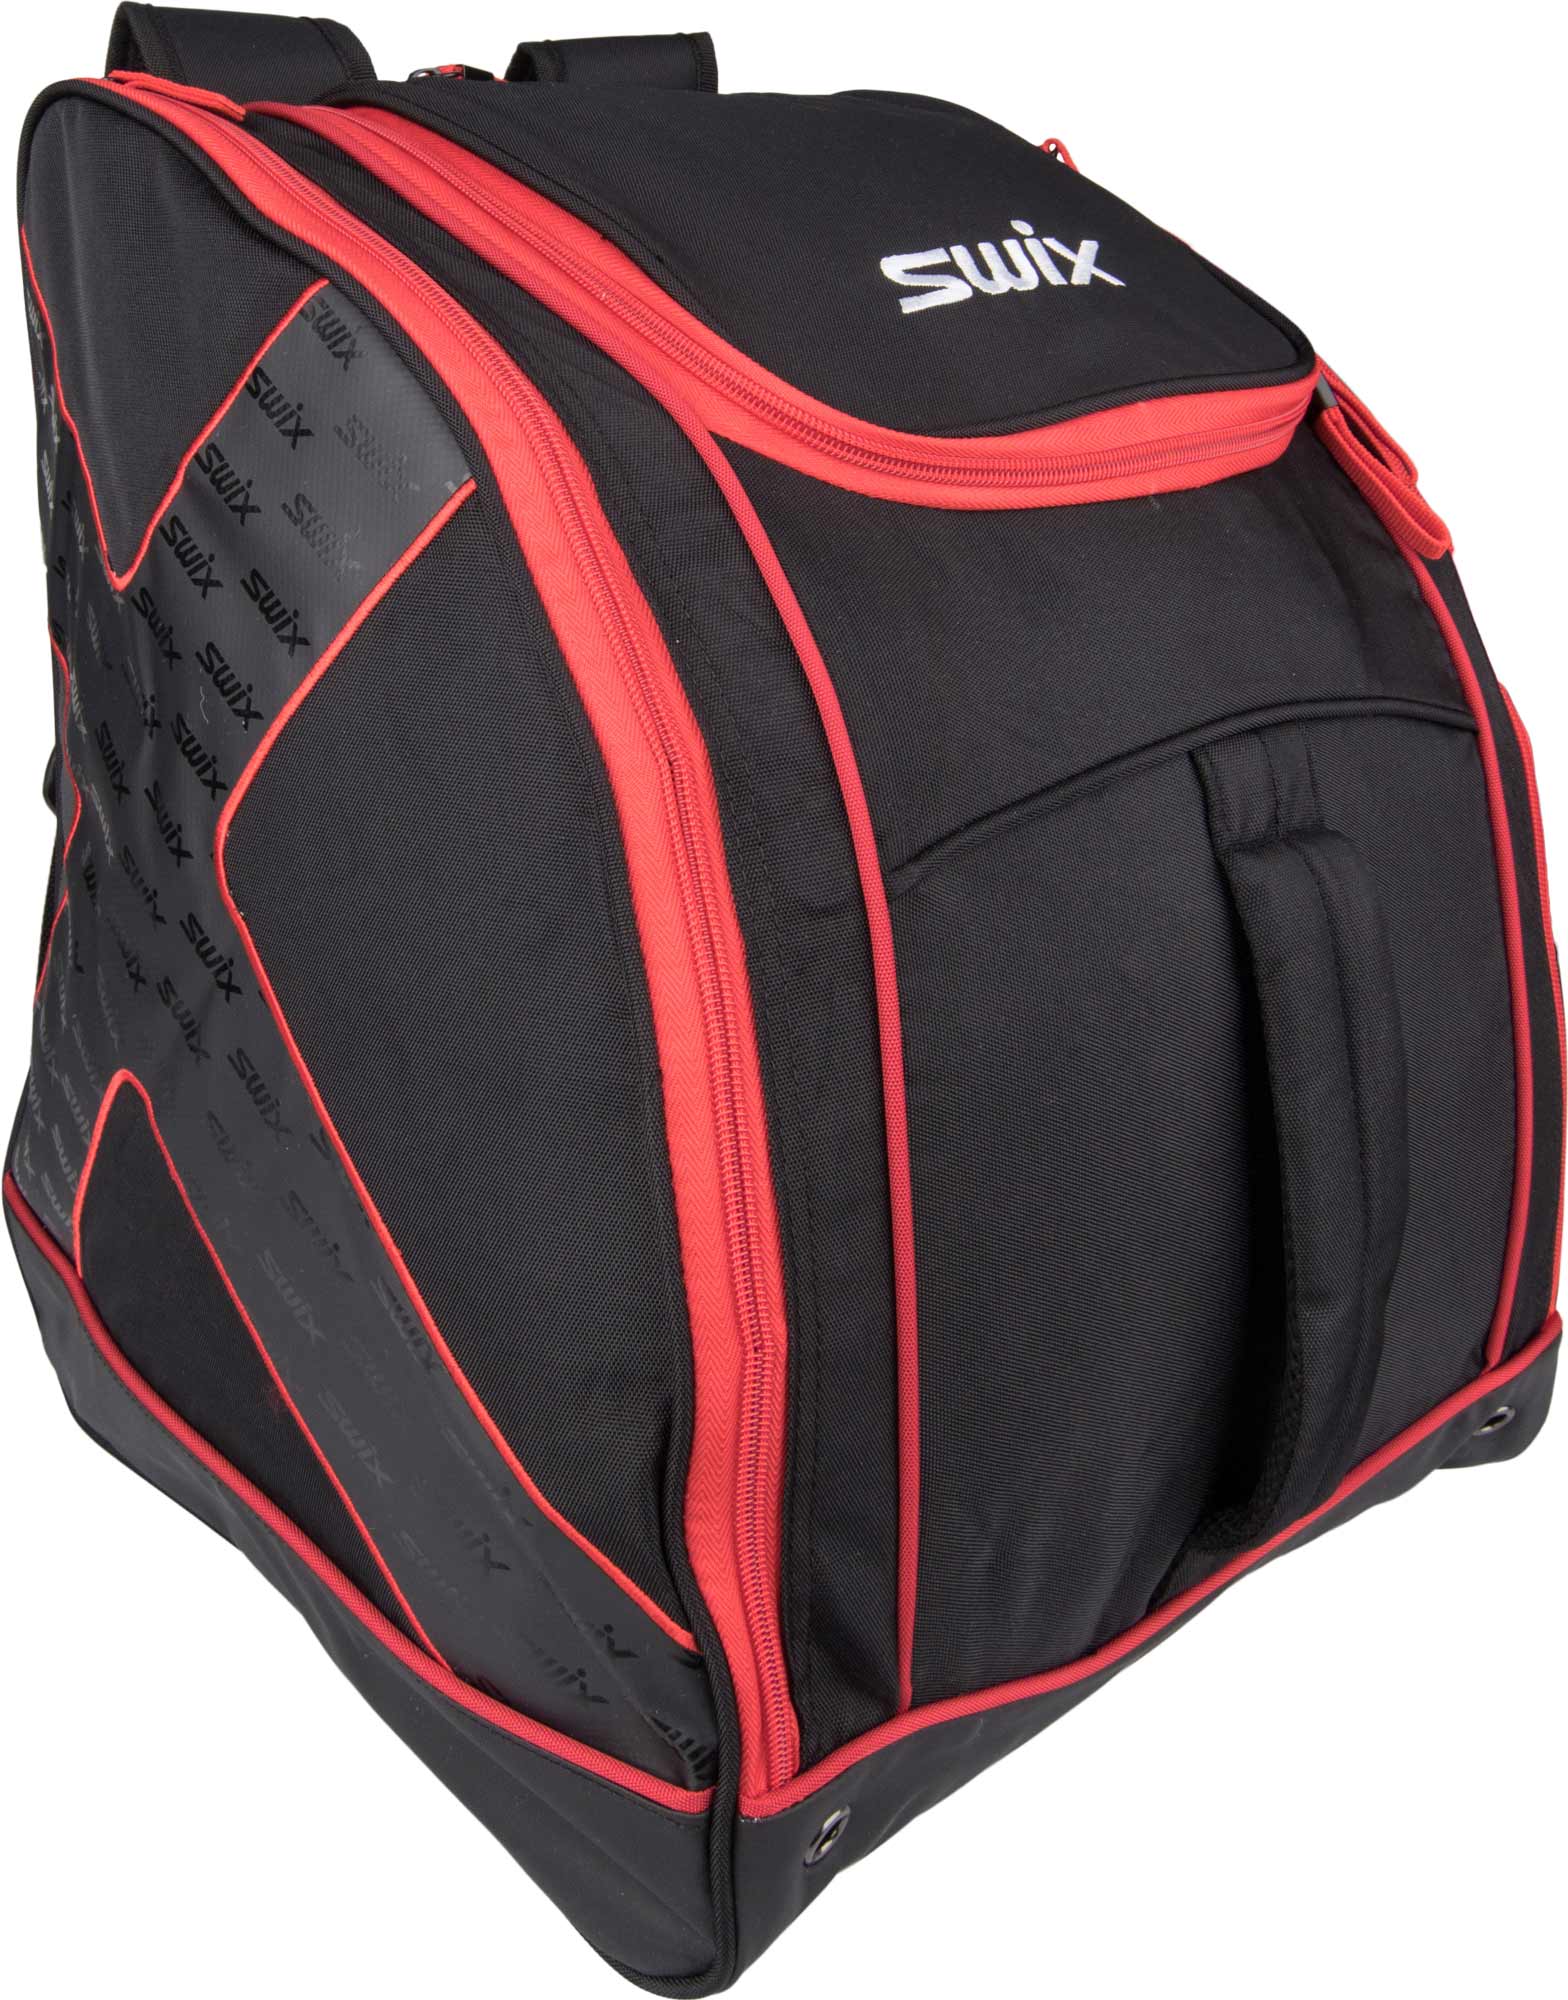 Skiing gear backpack